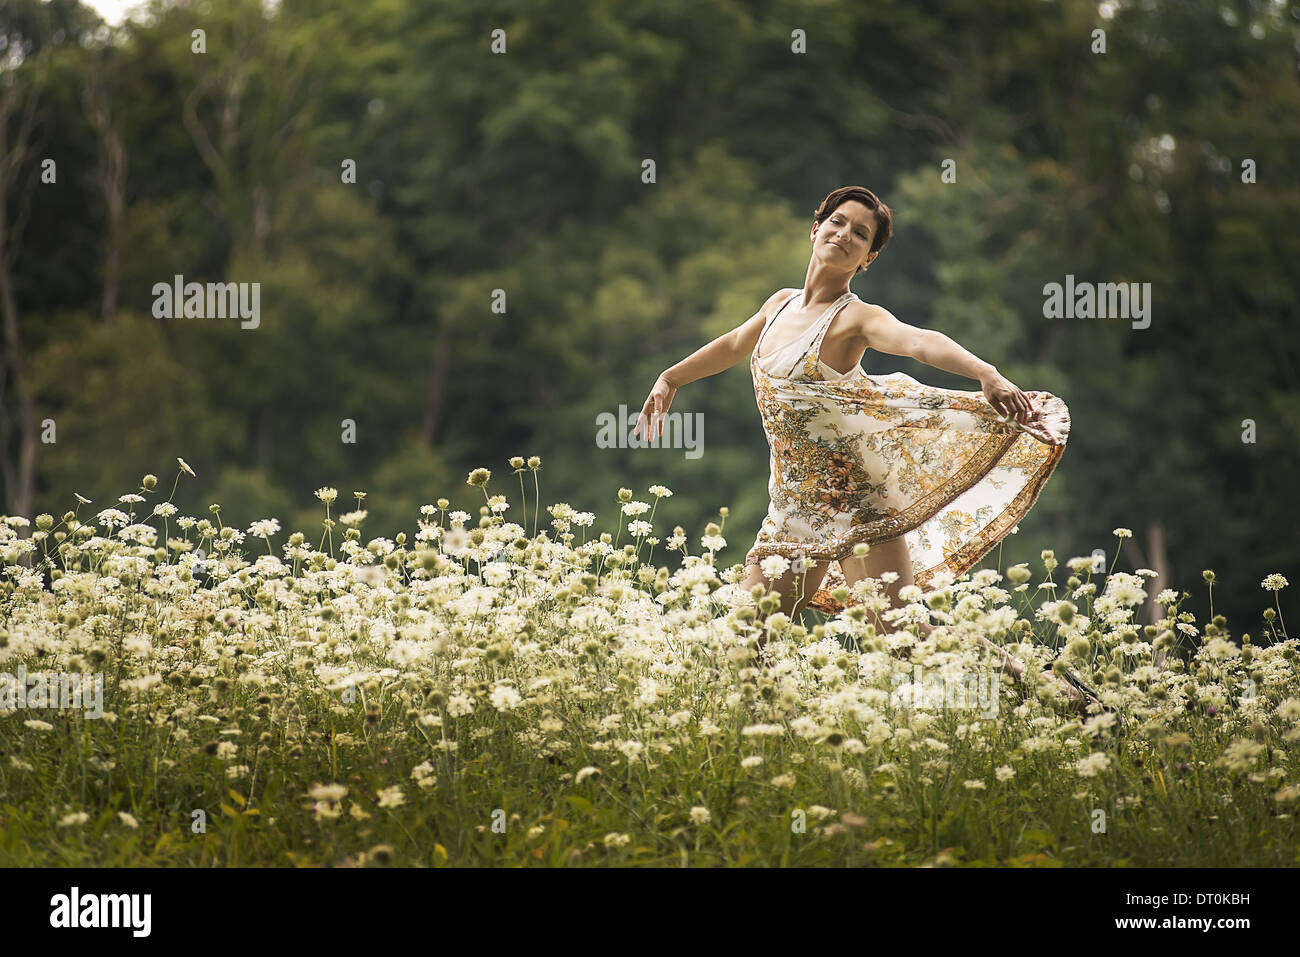 Woodstock New York USA woman dancing in field of wild flowers Stock Photo